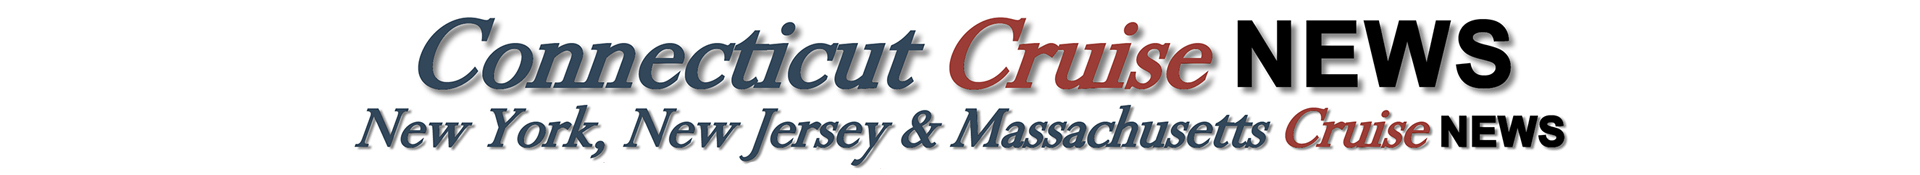 ct cruise news logo